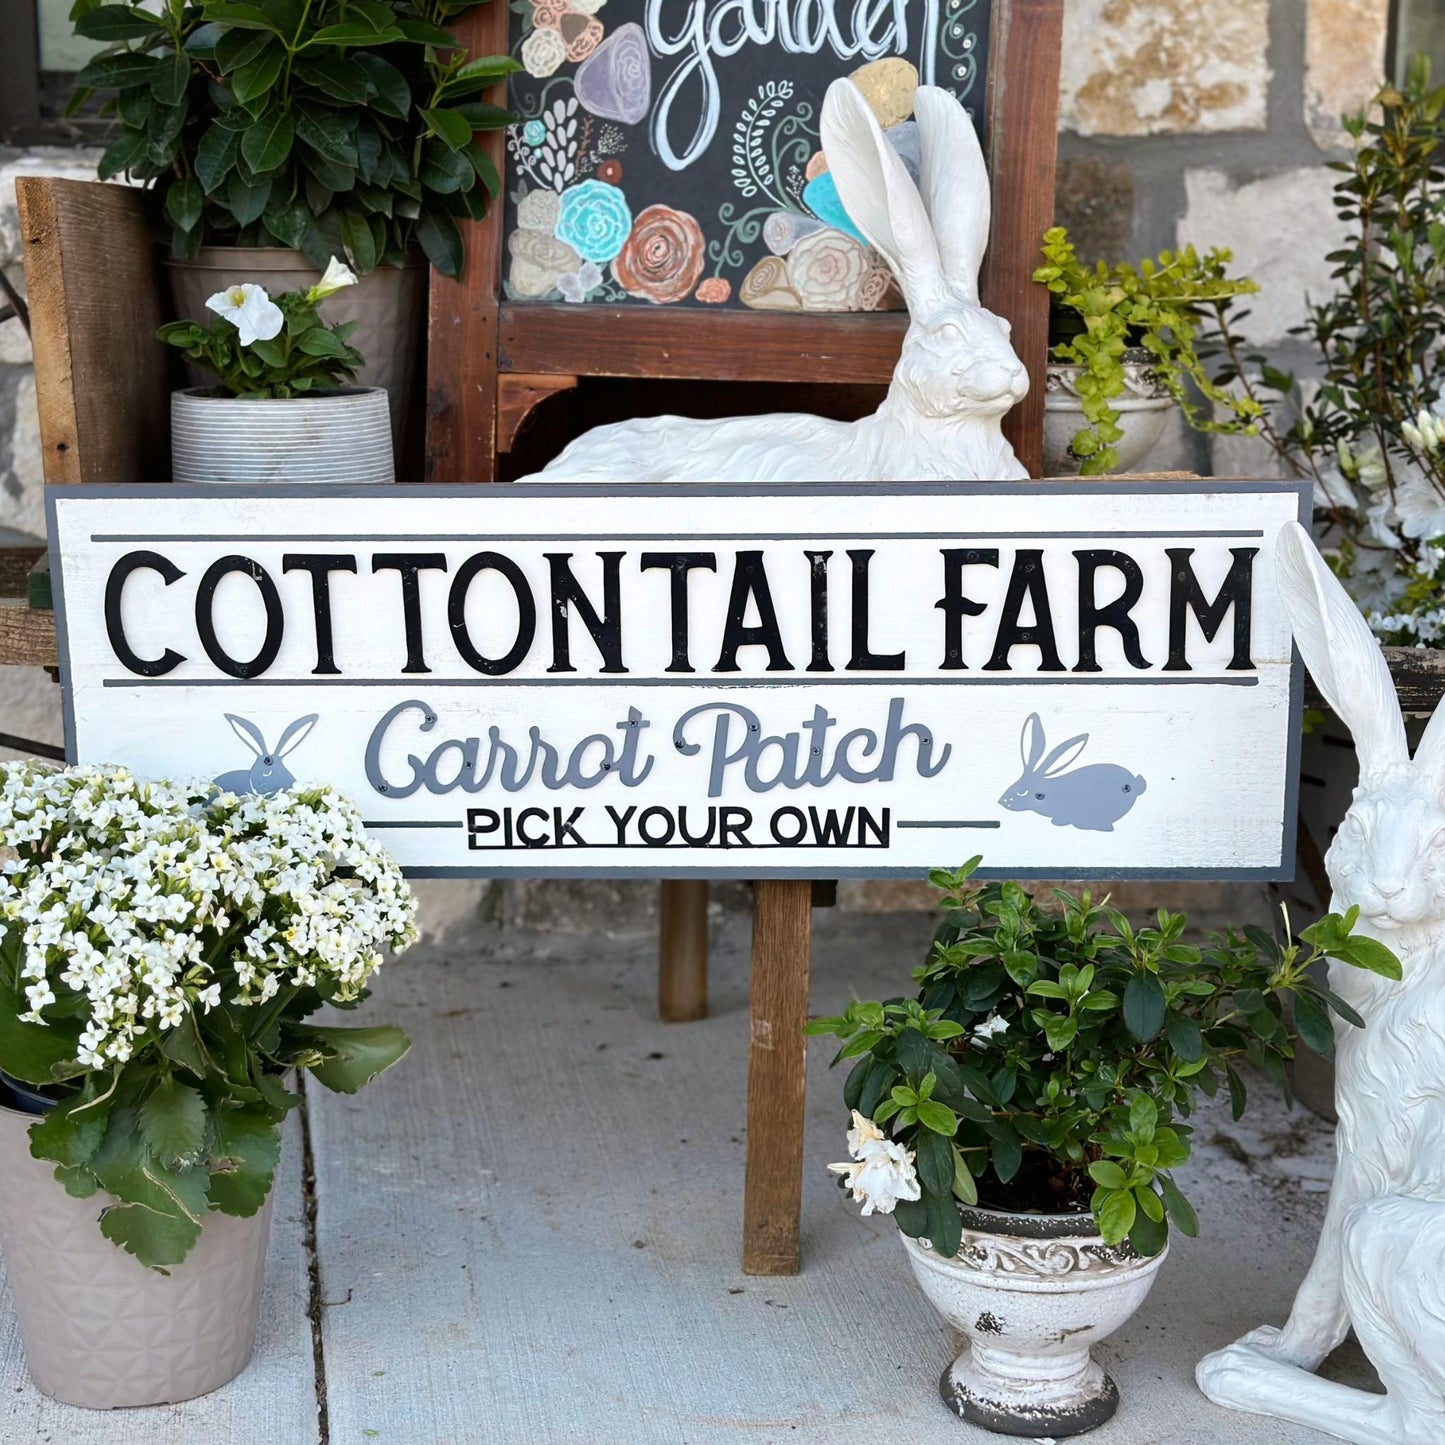 cottontail-farmhouse-sign-easter-home-decor-ctw-Threadbare Gypsy Soul